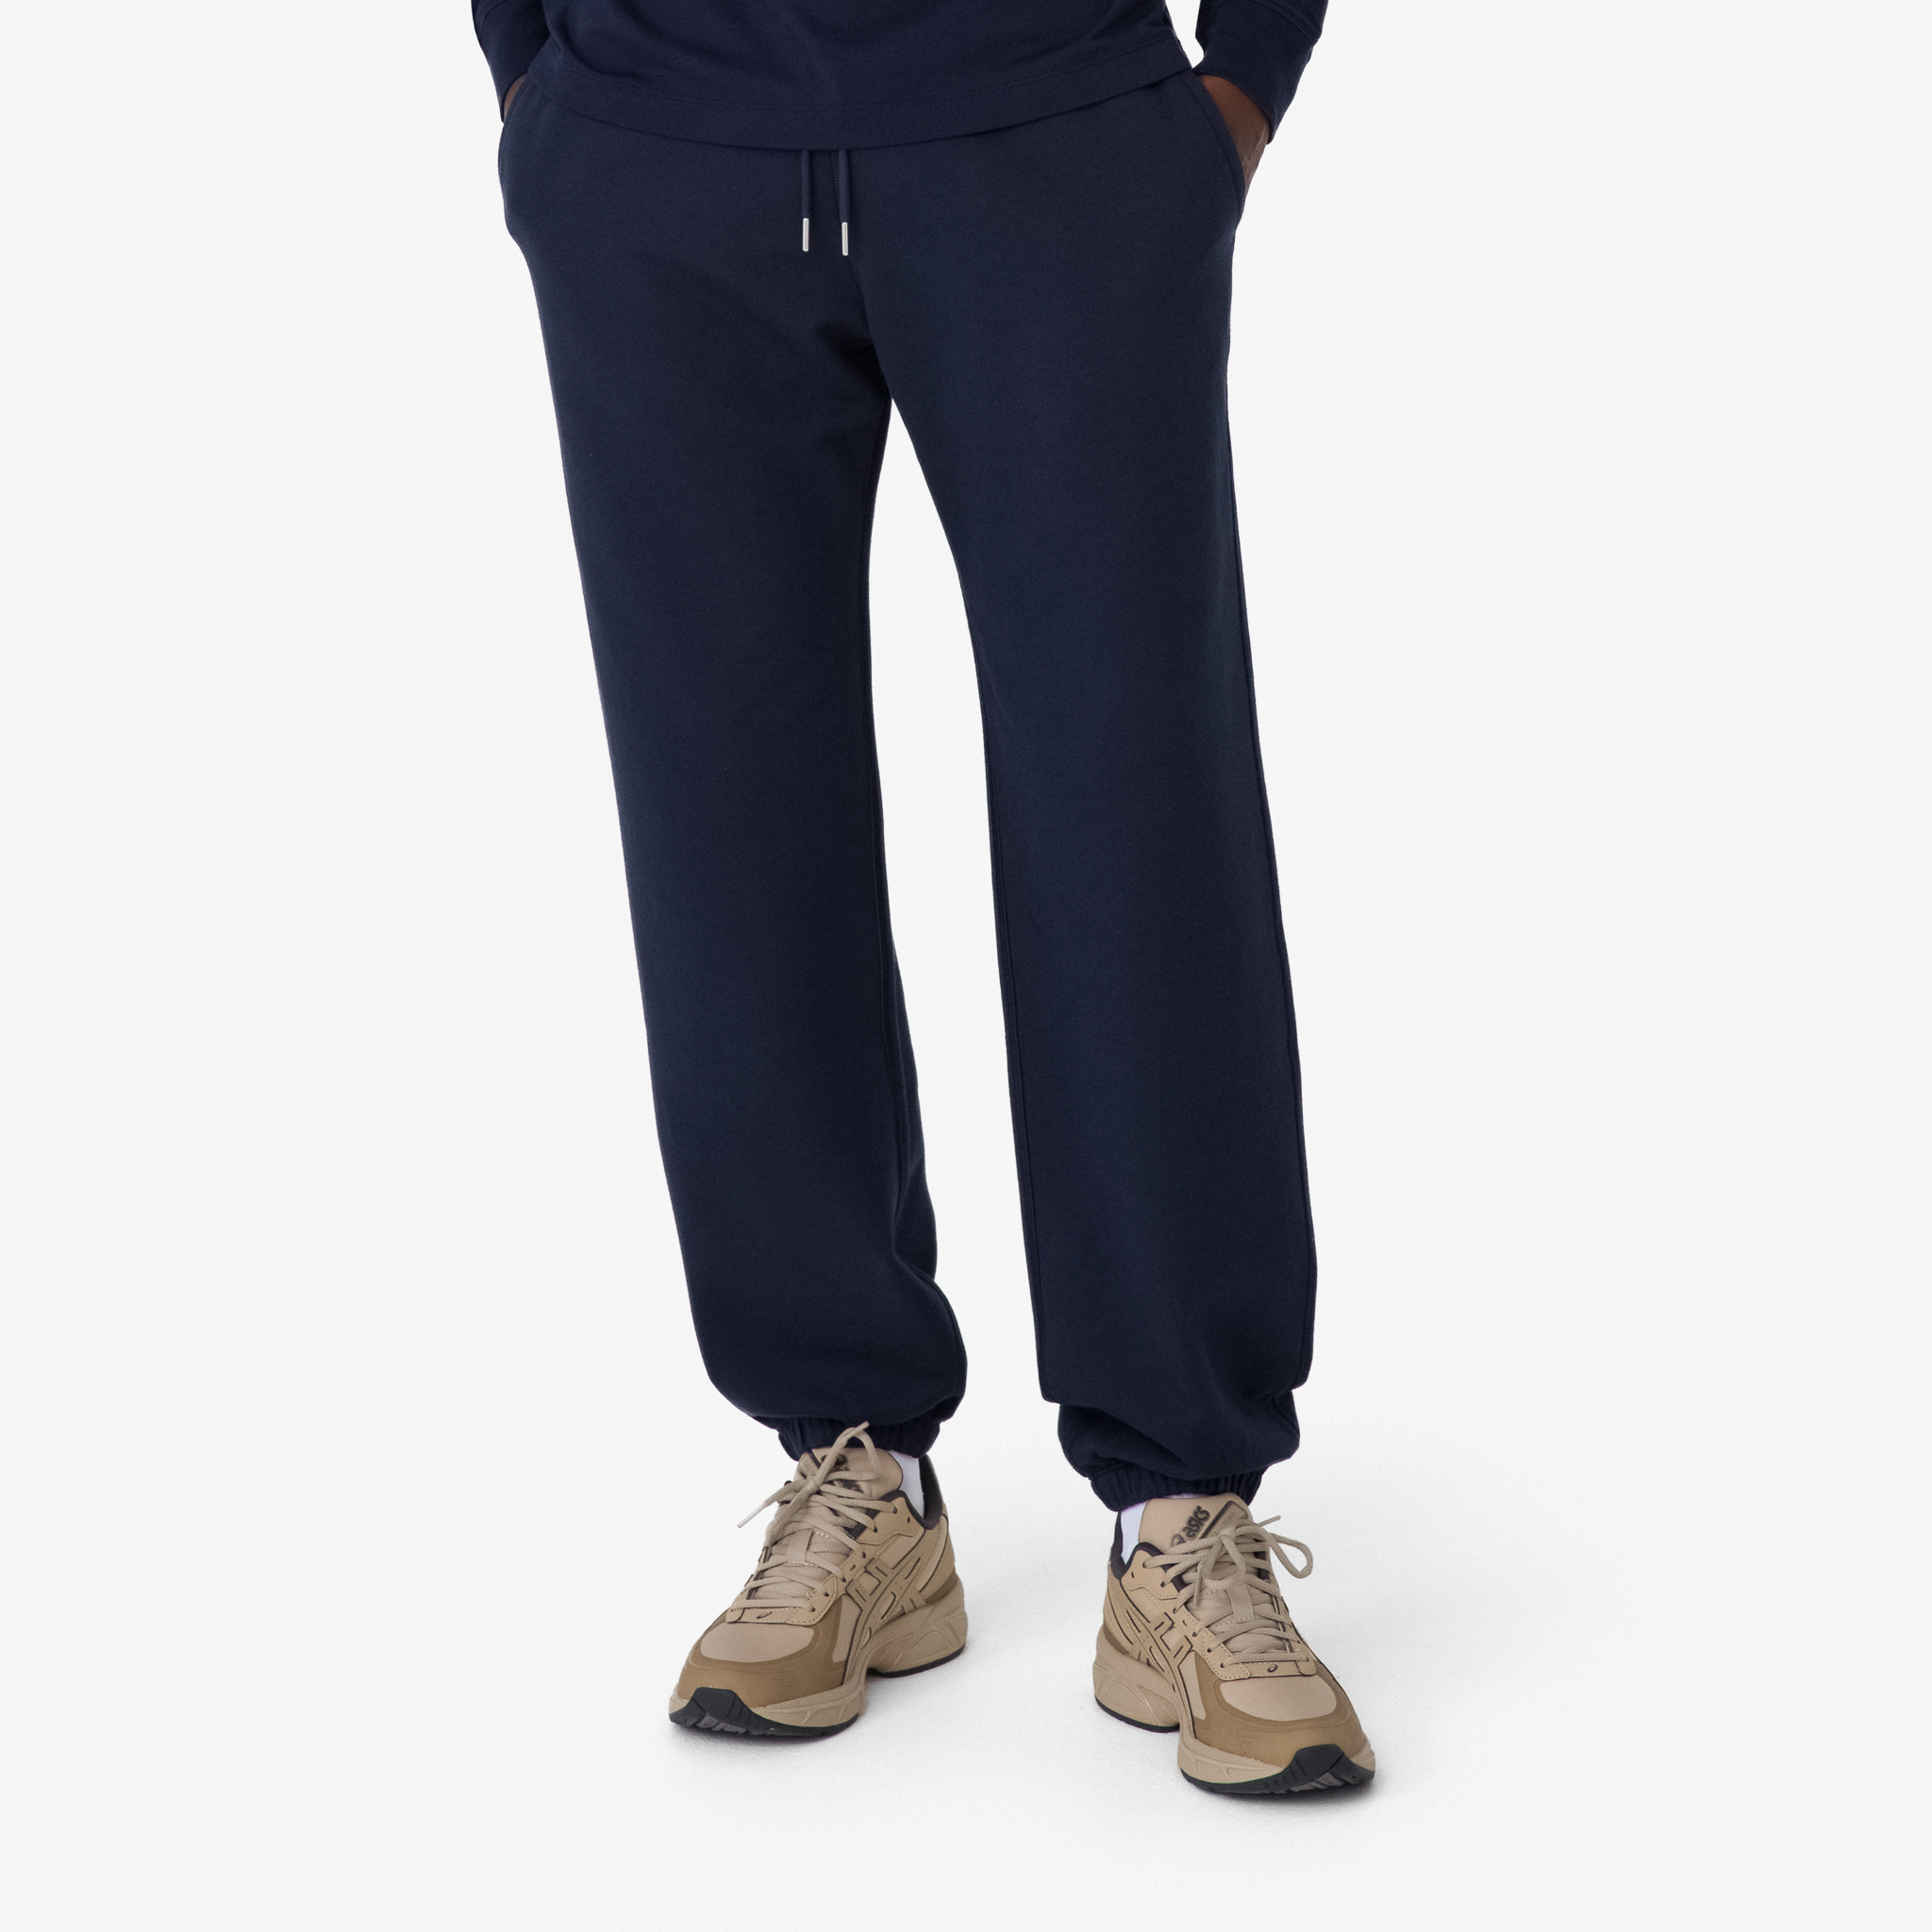 Xersion Sweatpants Men's XL Racing Blue Regular Fit NWT